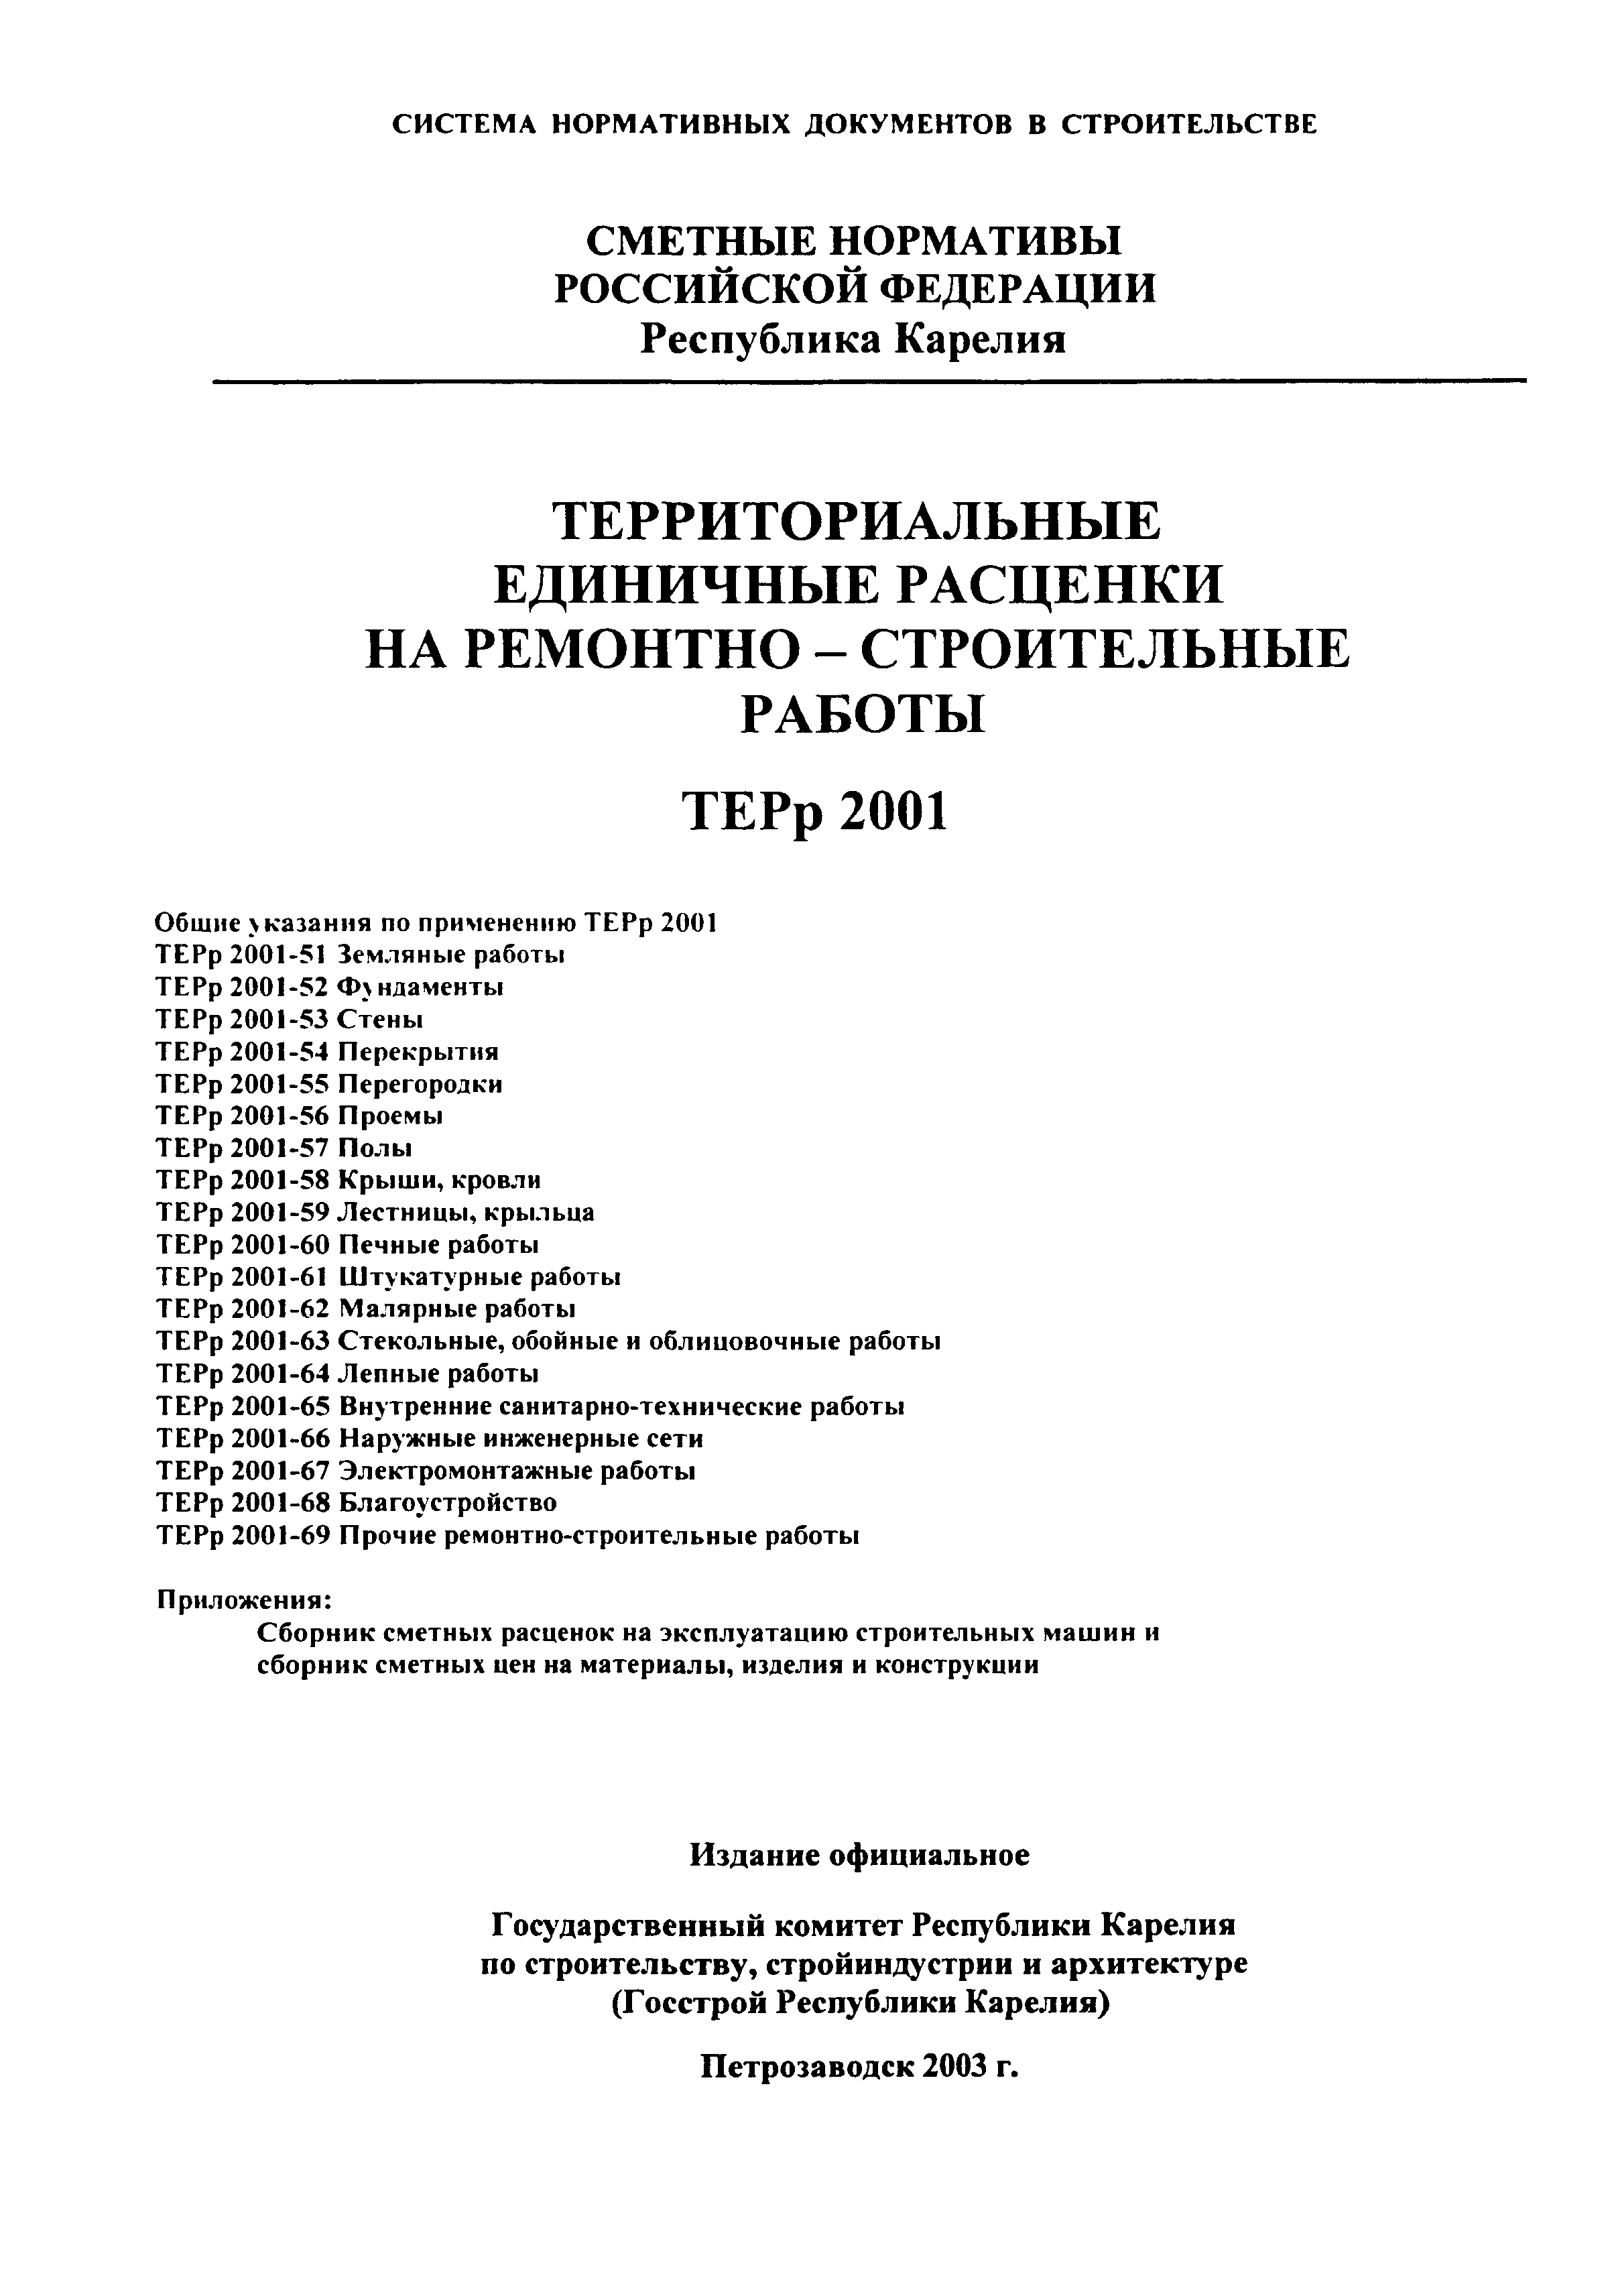 ТЕРр Республика Карелия 2001-68